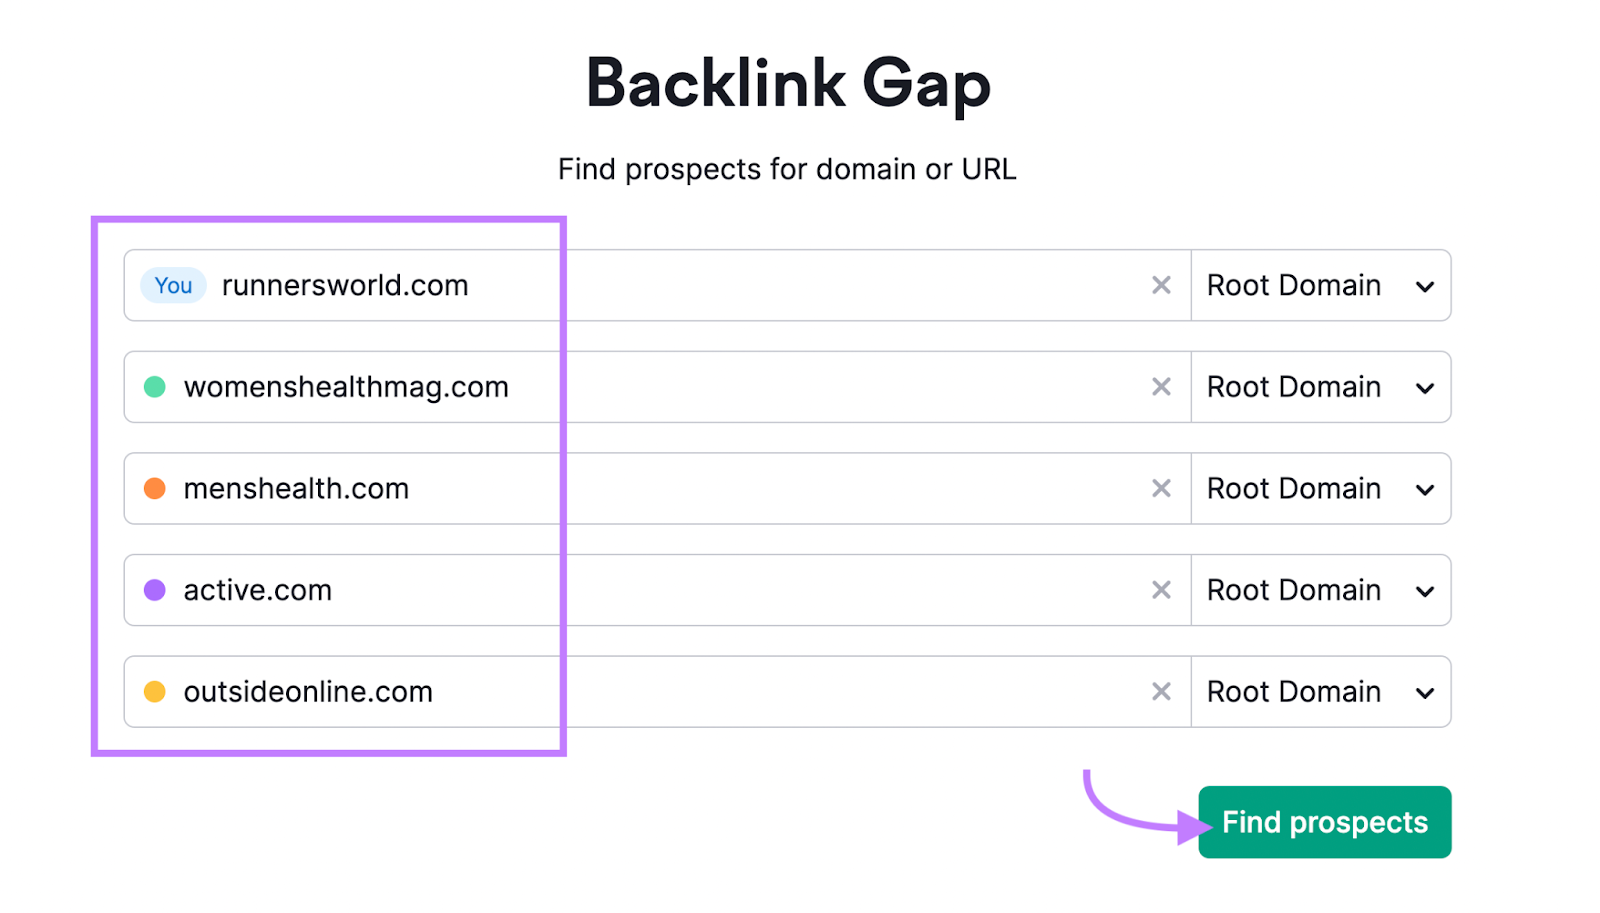 Backlink Gap tool